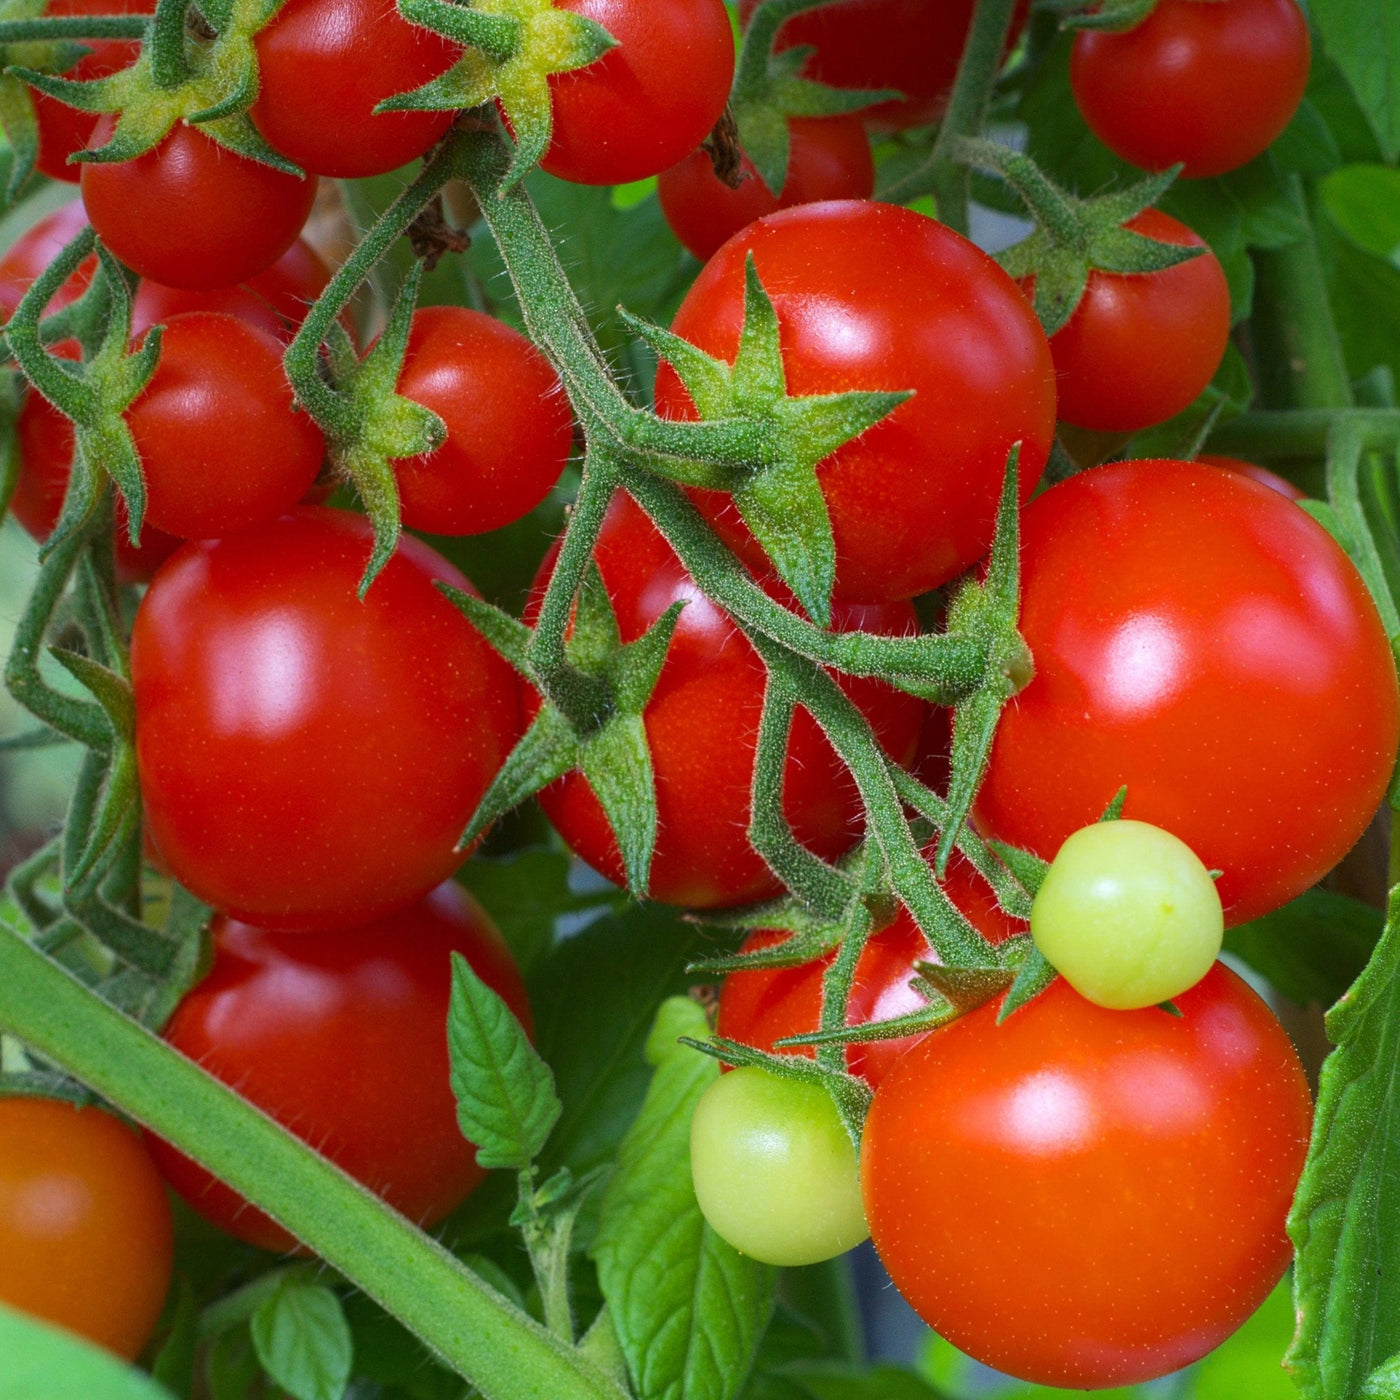 Tomato Red Cherry - Metchosin Farm